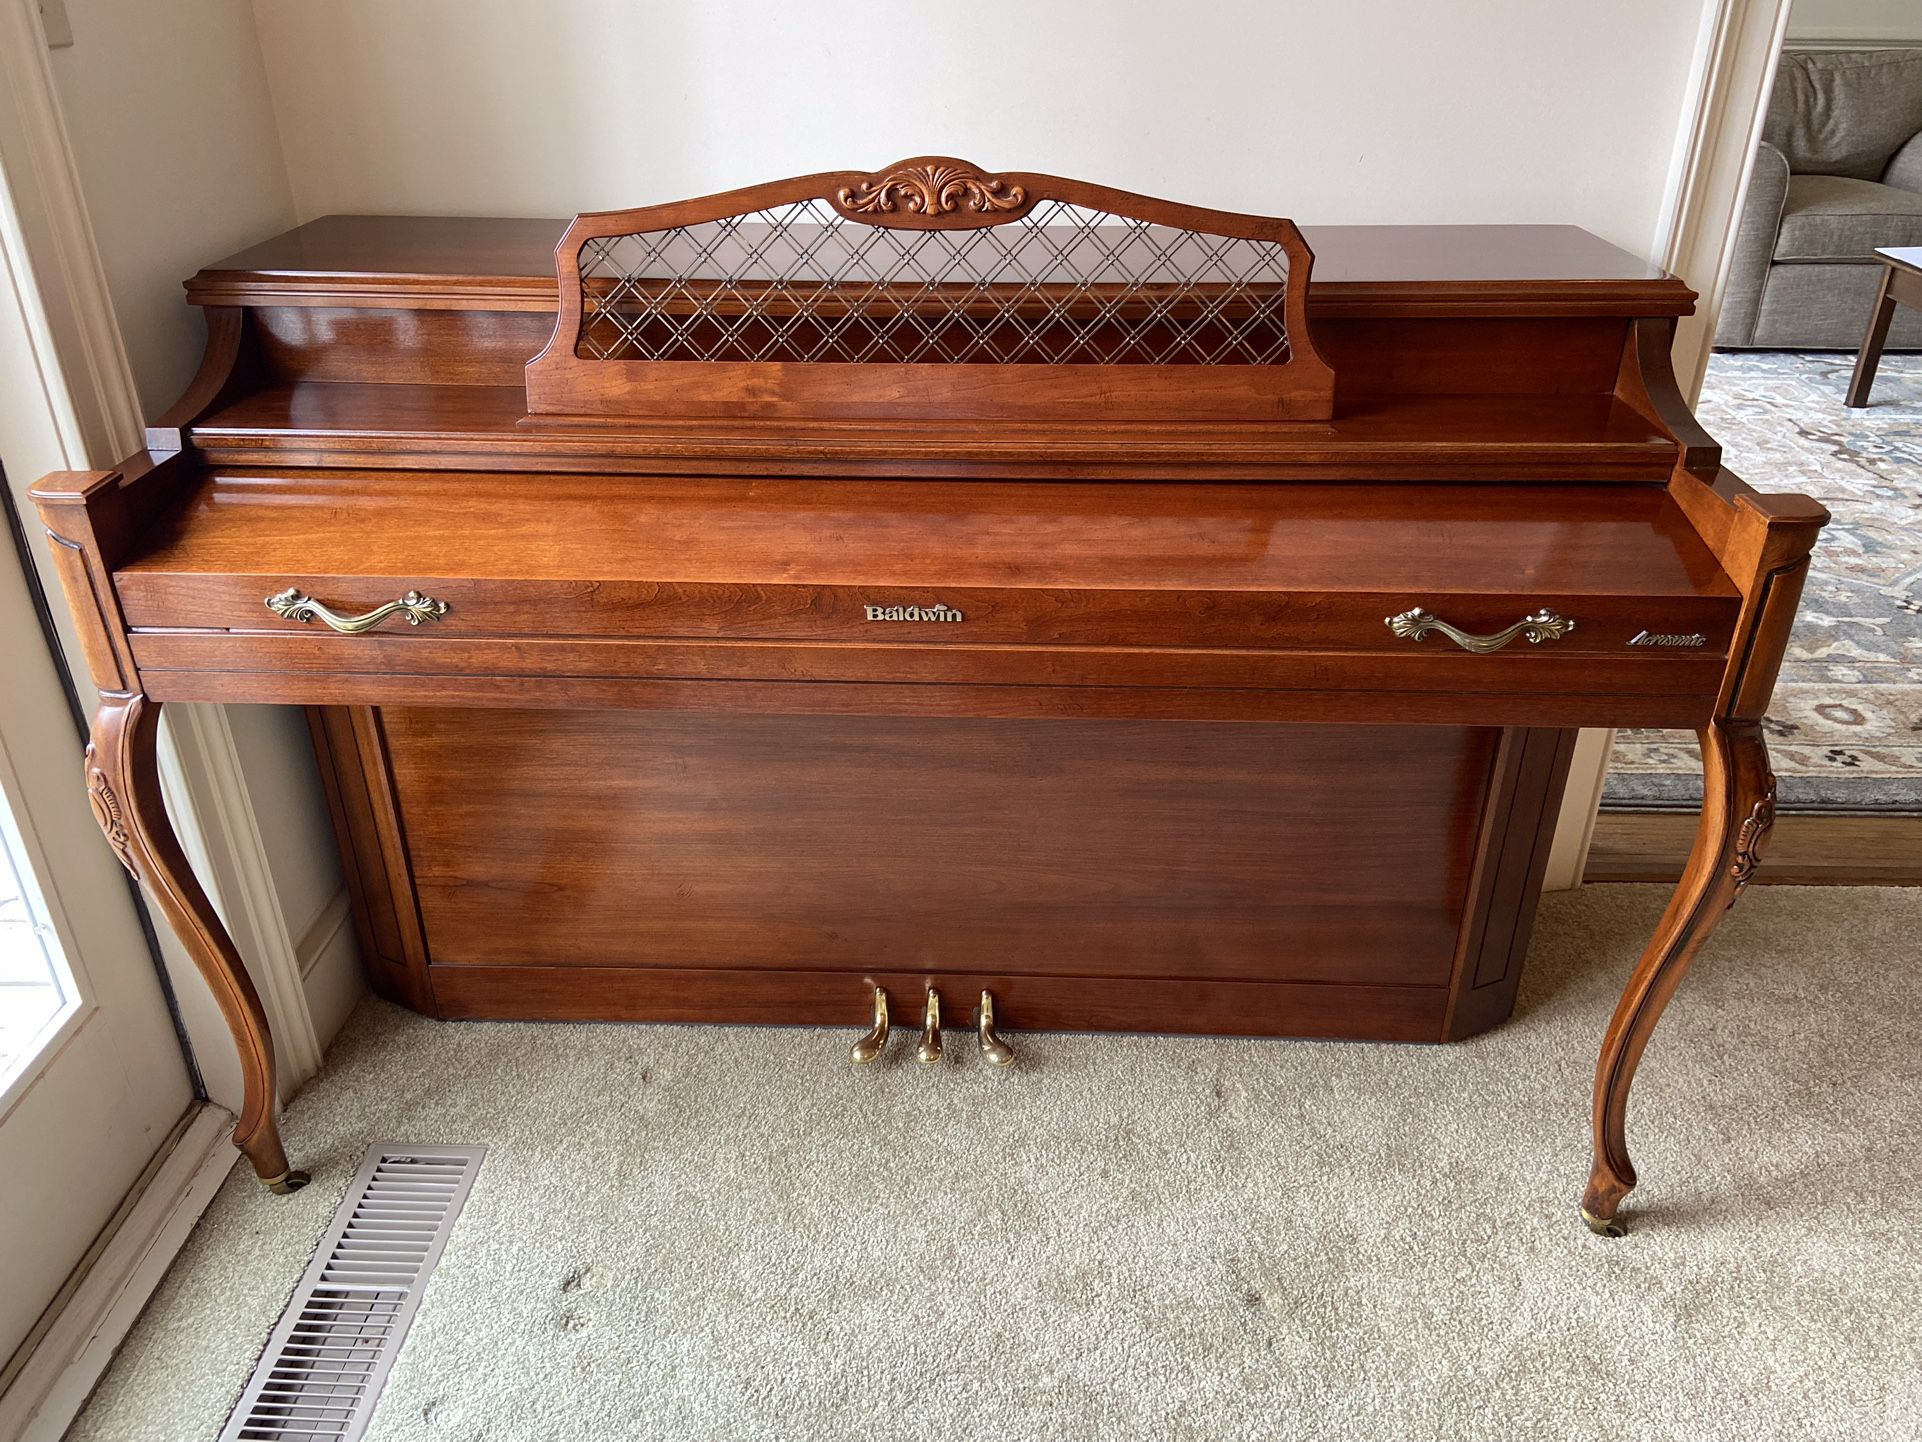 Baldwin Arosonic Elite Upright Piano & Bench In Cherry